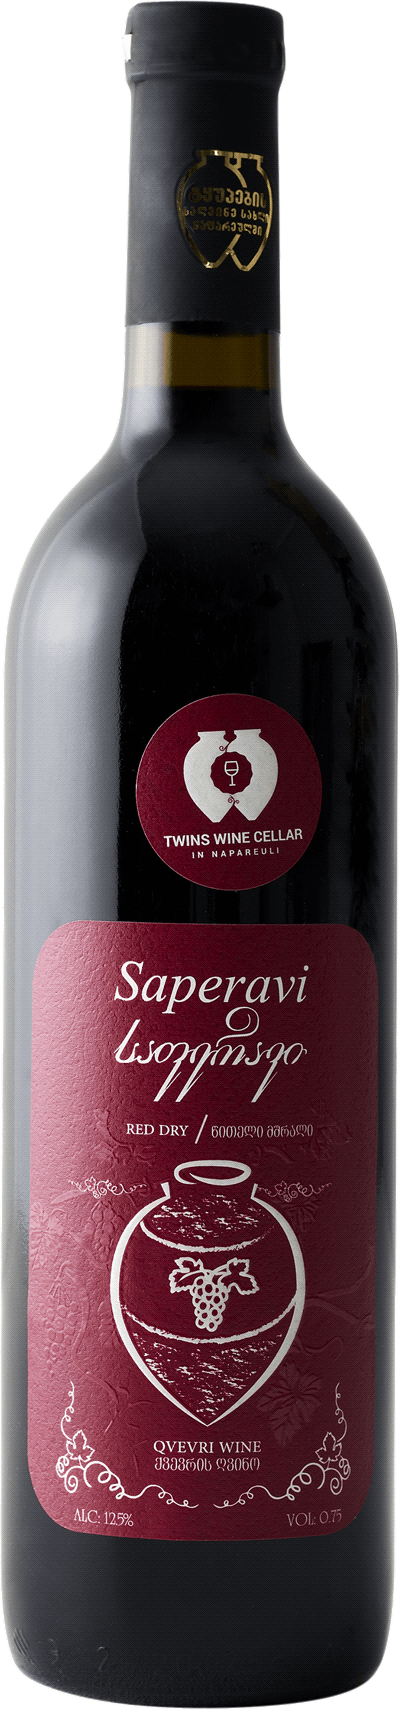 Twins Wine Cellar Saperavi, 2018